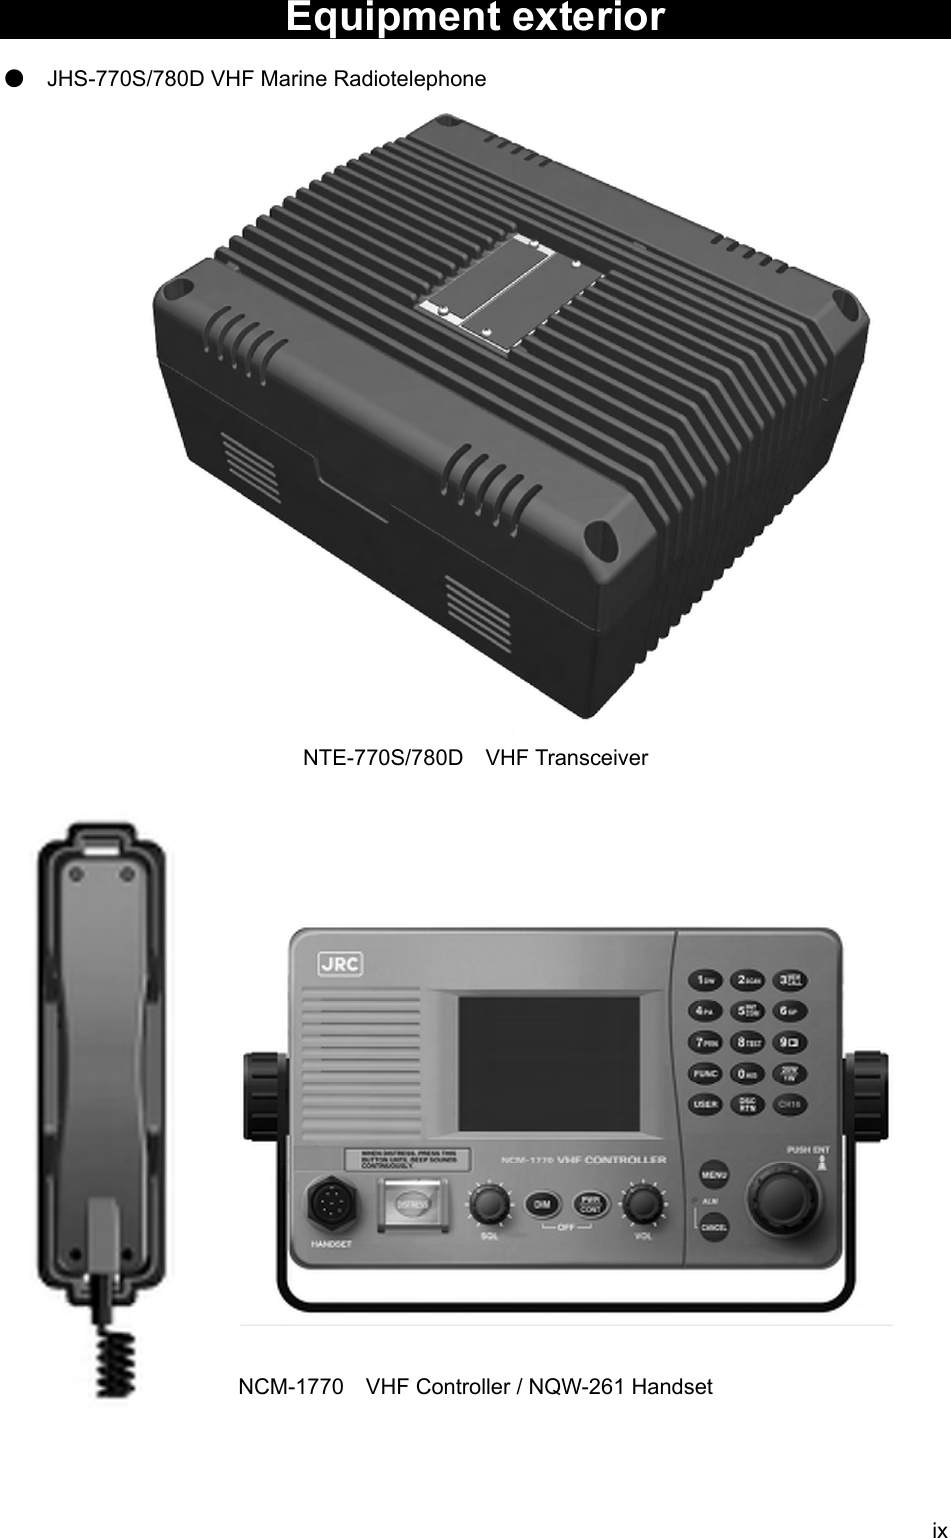  ix Equipment exterior  ● JHS-770S/780D VHF Marine Radiotelephone                           NTE-770S/780D  VHF Transceiver                         NCM-1770    VHF Controller / NQW-261 Handset   